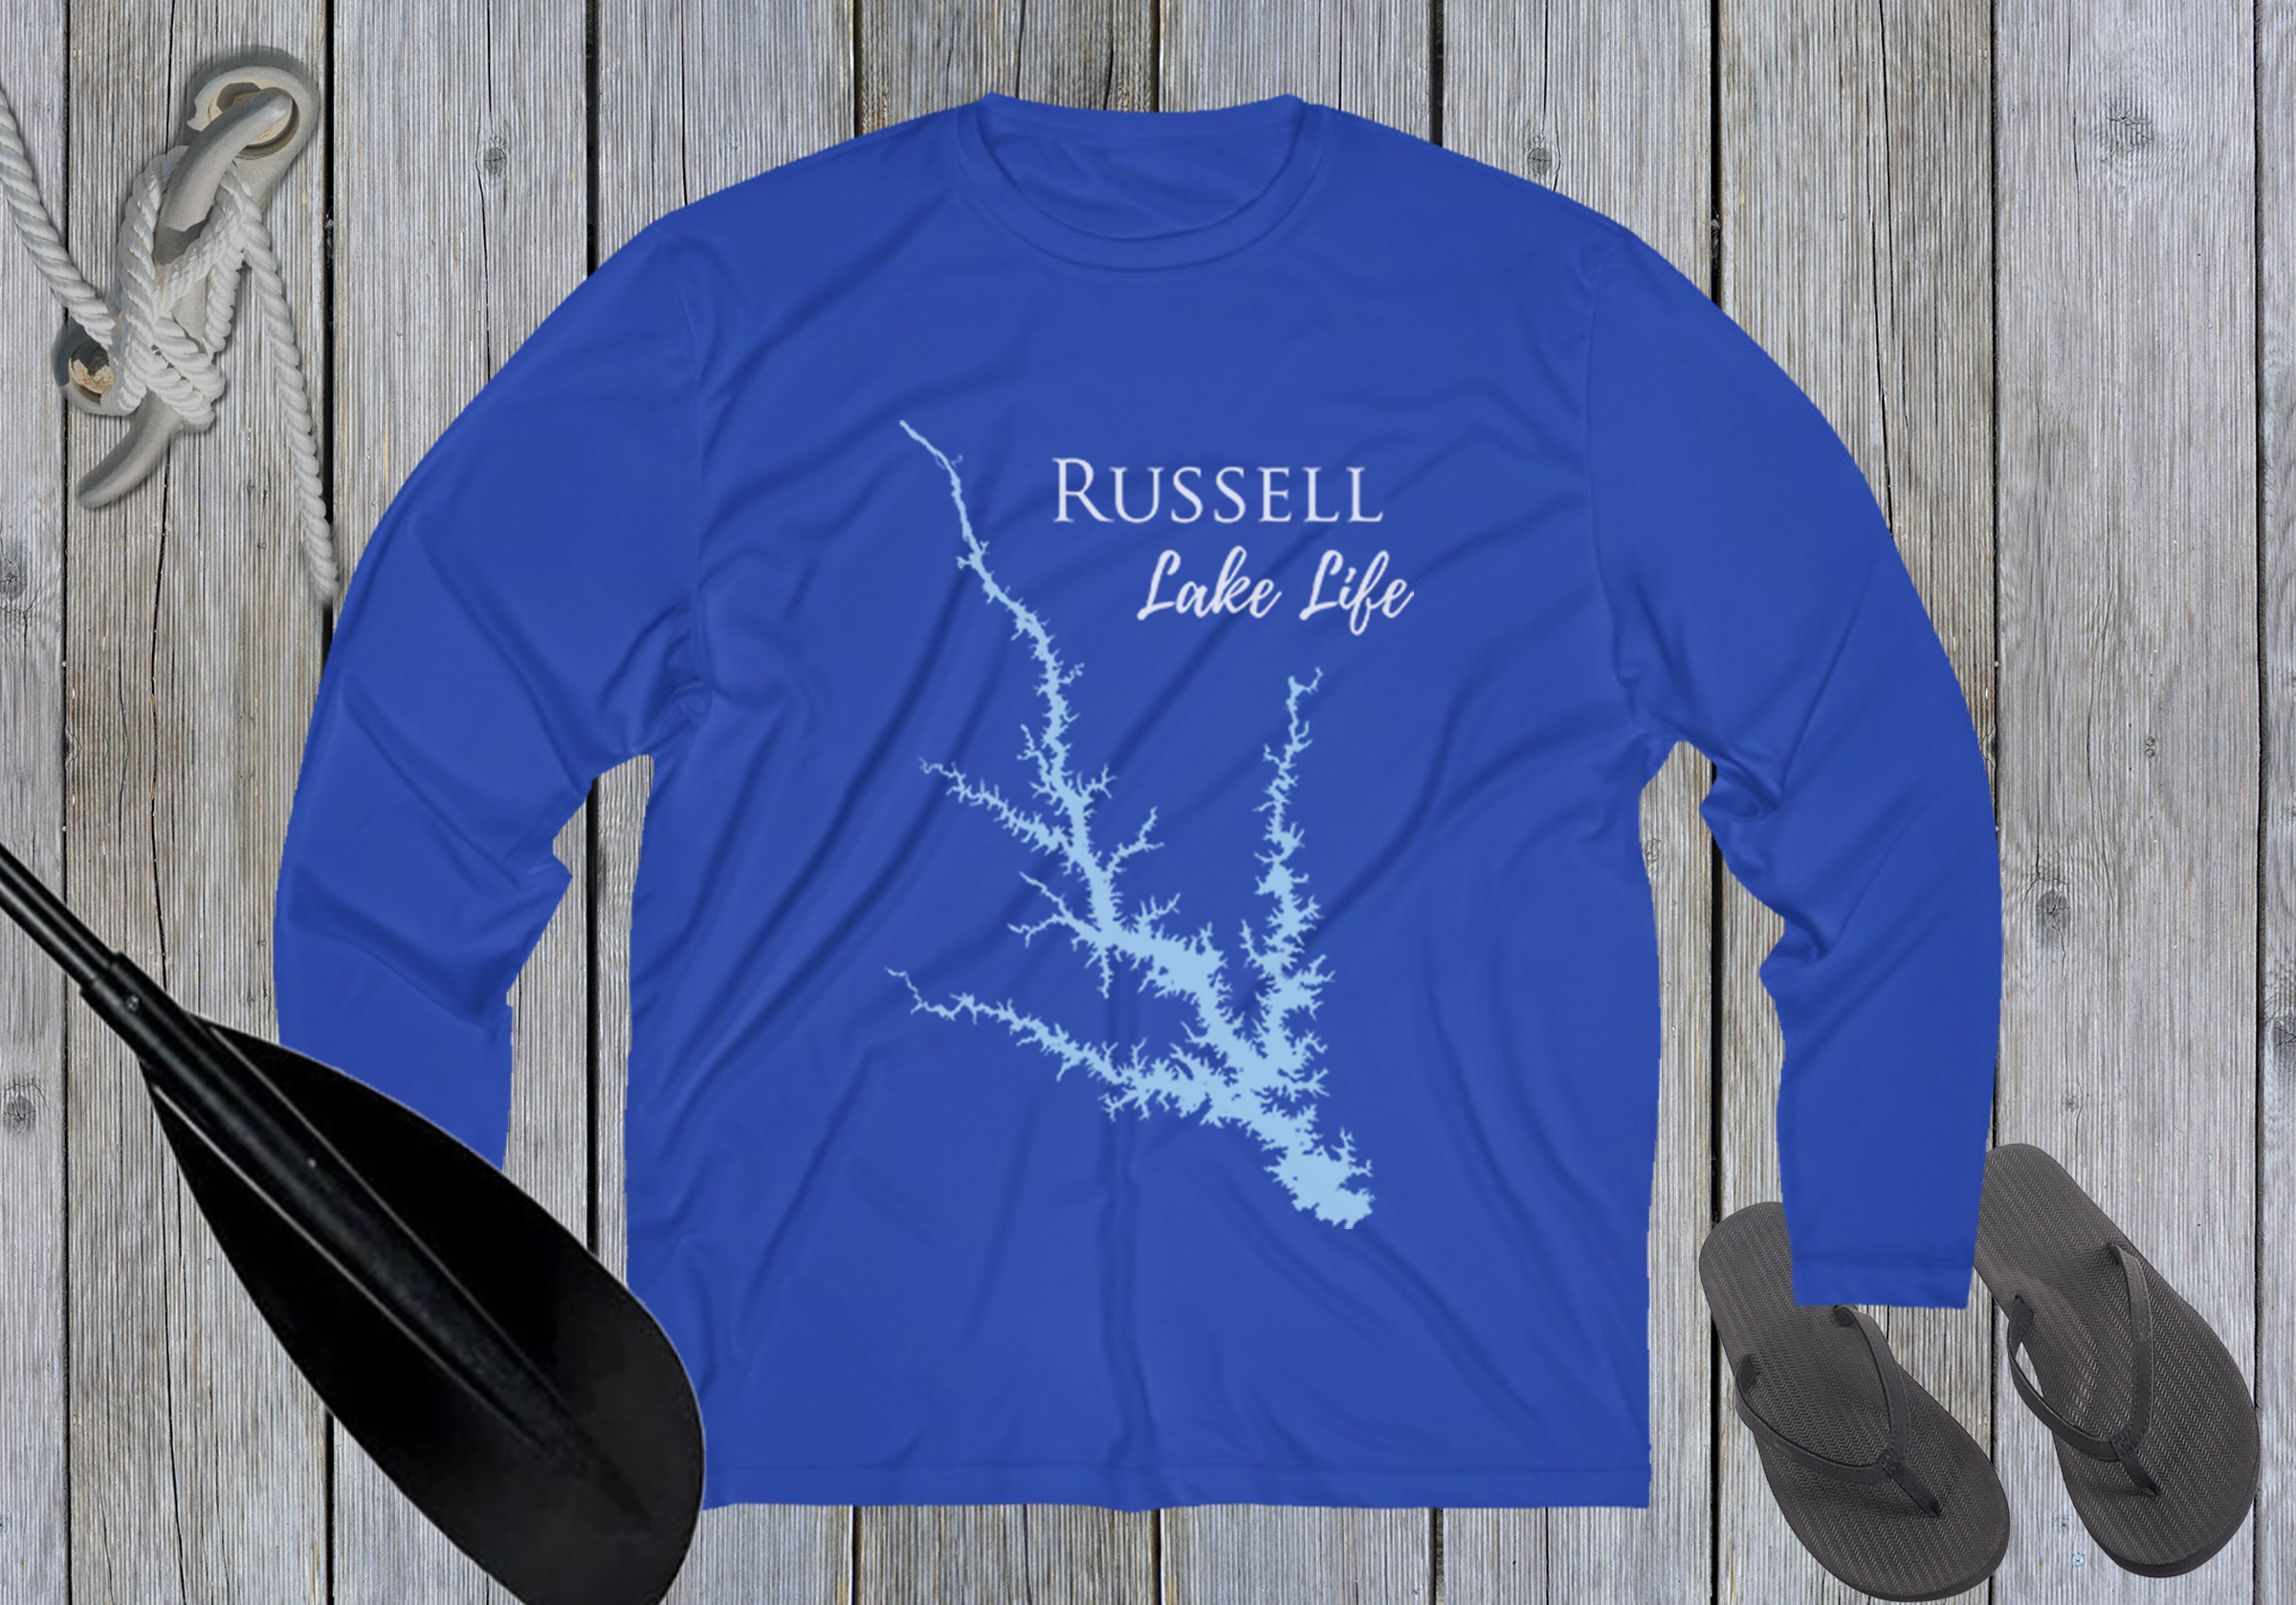 Russell Lake Life Dri-fit Boating Shirt - Breathable Material- Men's Long Sleeve Moisture Wicking Tee - Georgia & South Carolina Lake